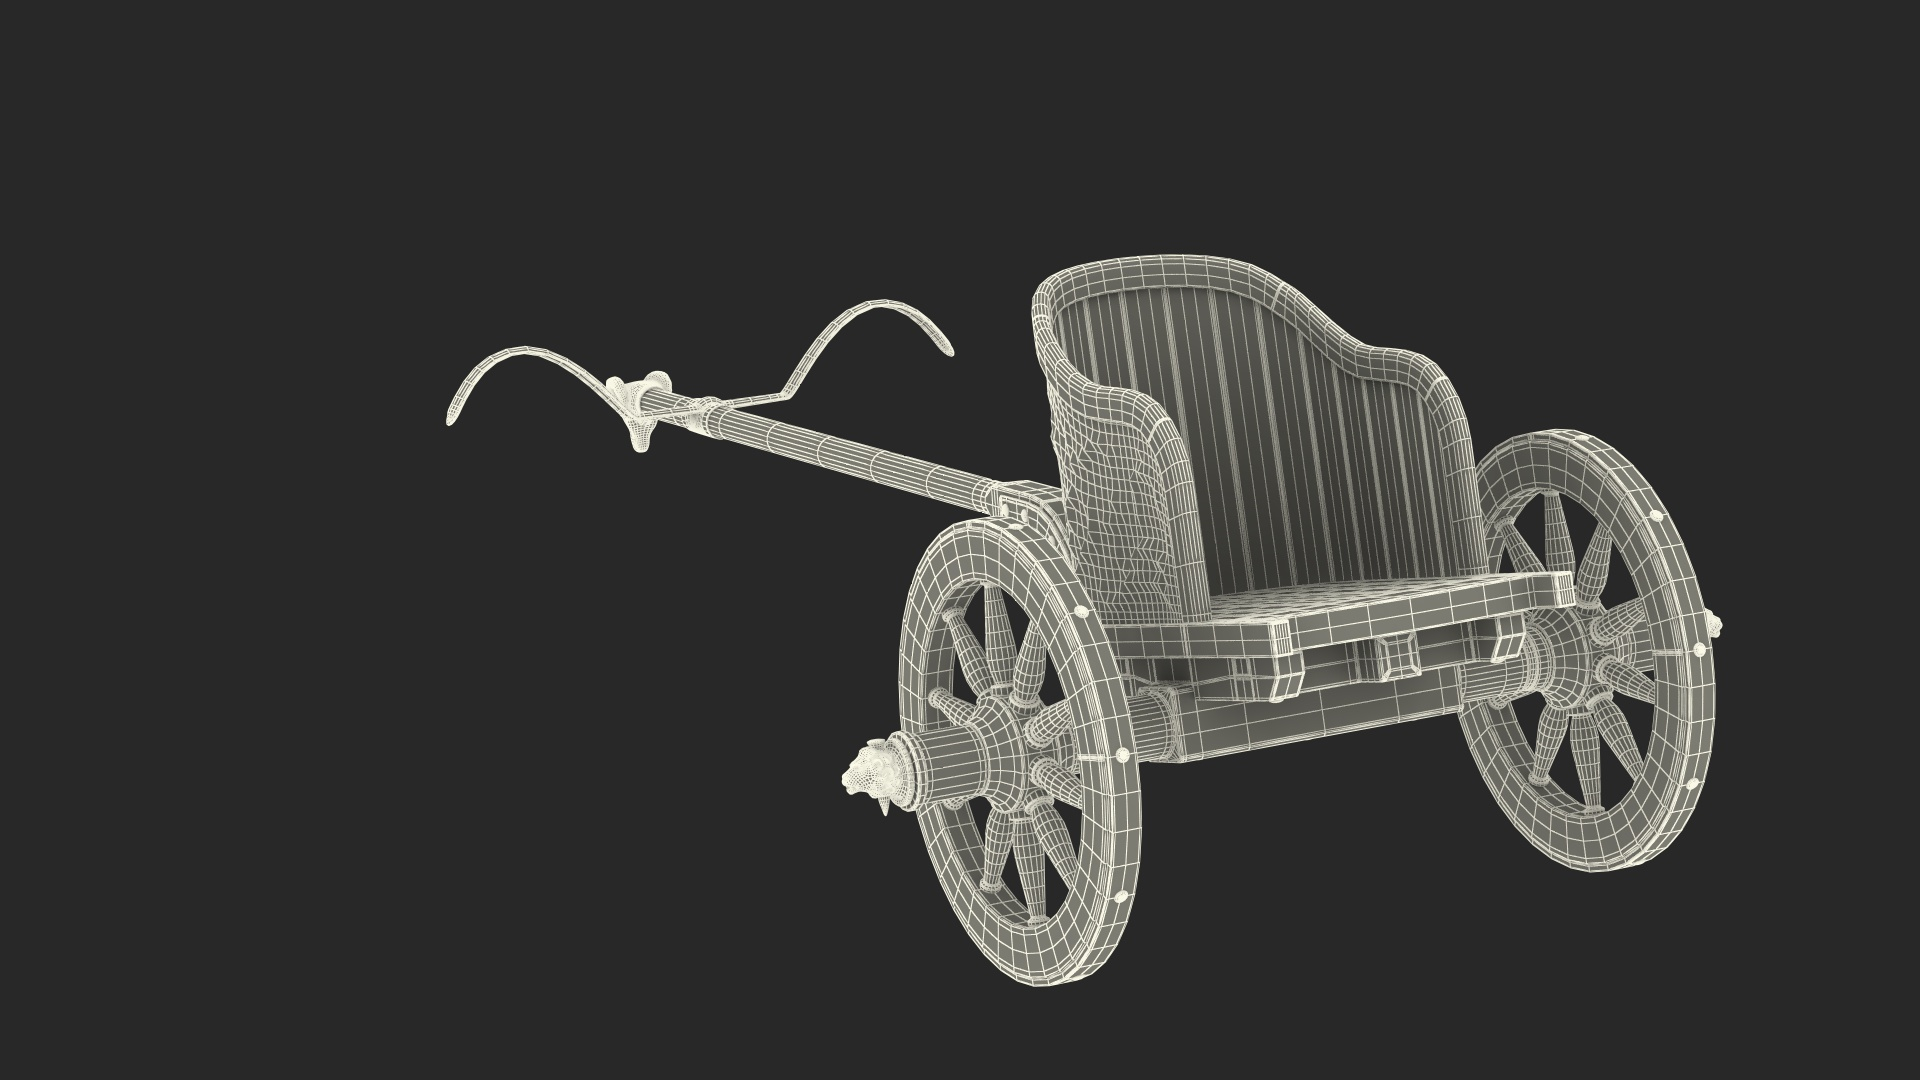 3D model Roman Chariot https://p.turbosquid.com/ts-thumb/jJ/vQW590/tu/roman_chariot_361/jpg/1676959320/1920x1080/turn_fit_q99/bbf8dde50641ac7ab0cacb5ee50eeae06f192e75/roman_chariot_361-1.jpg